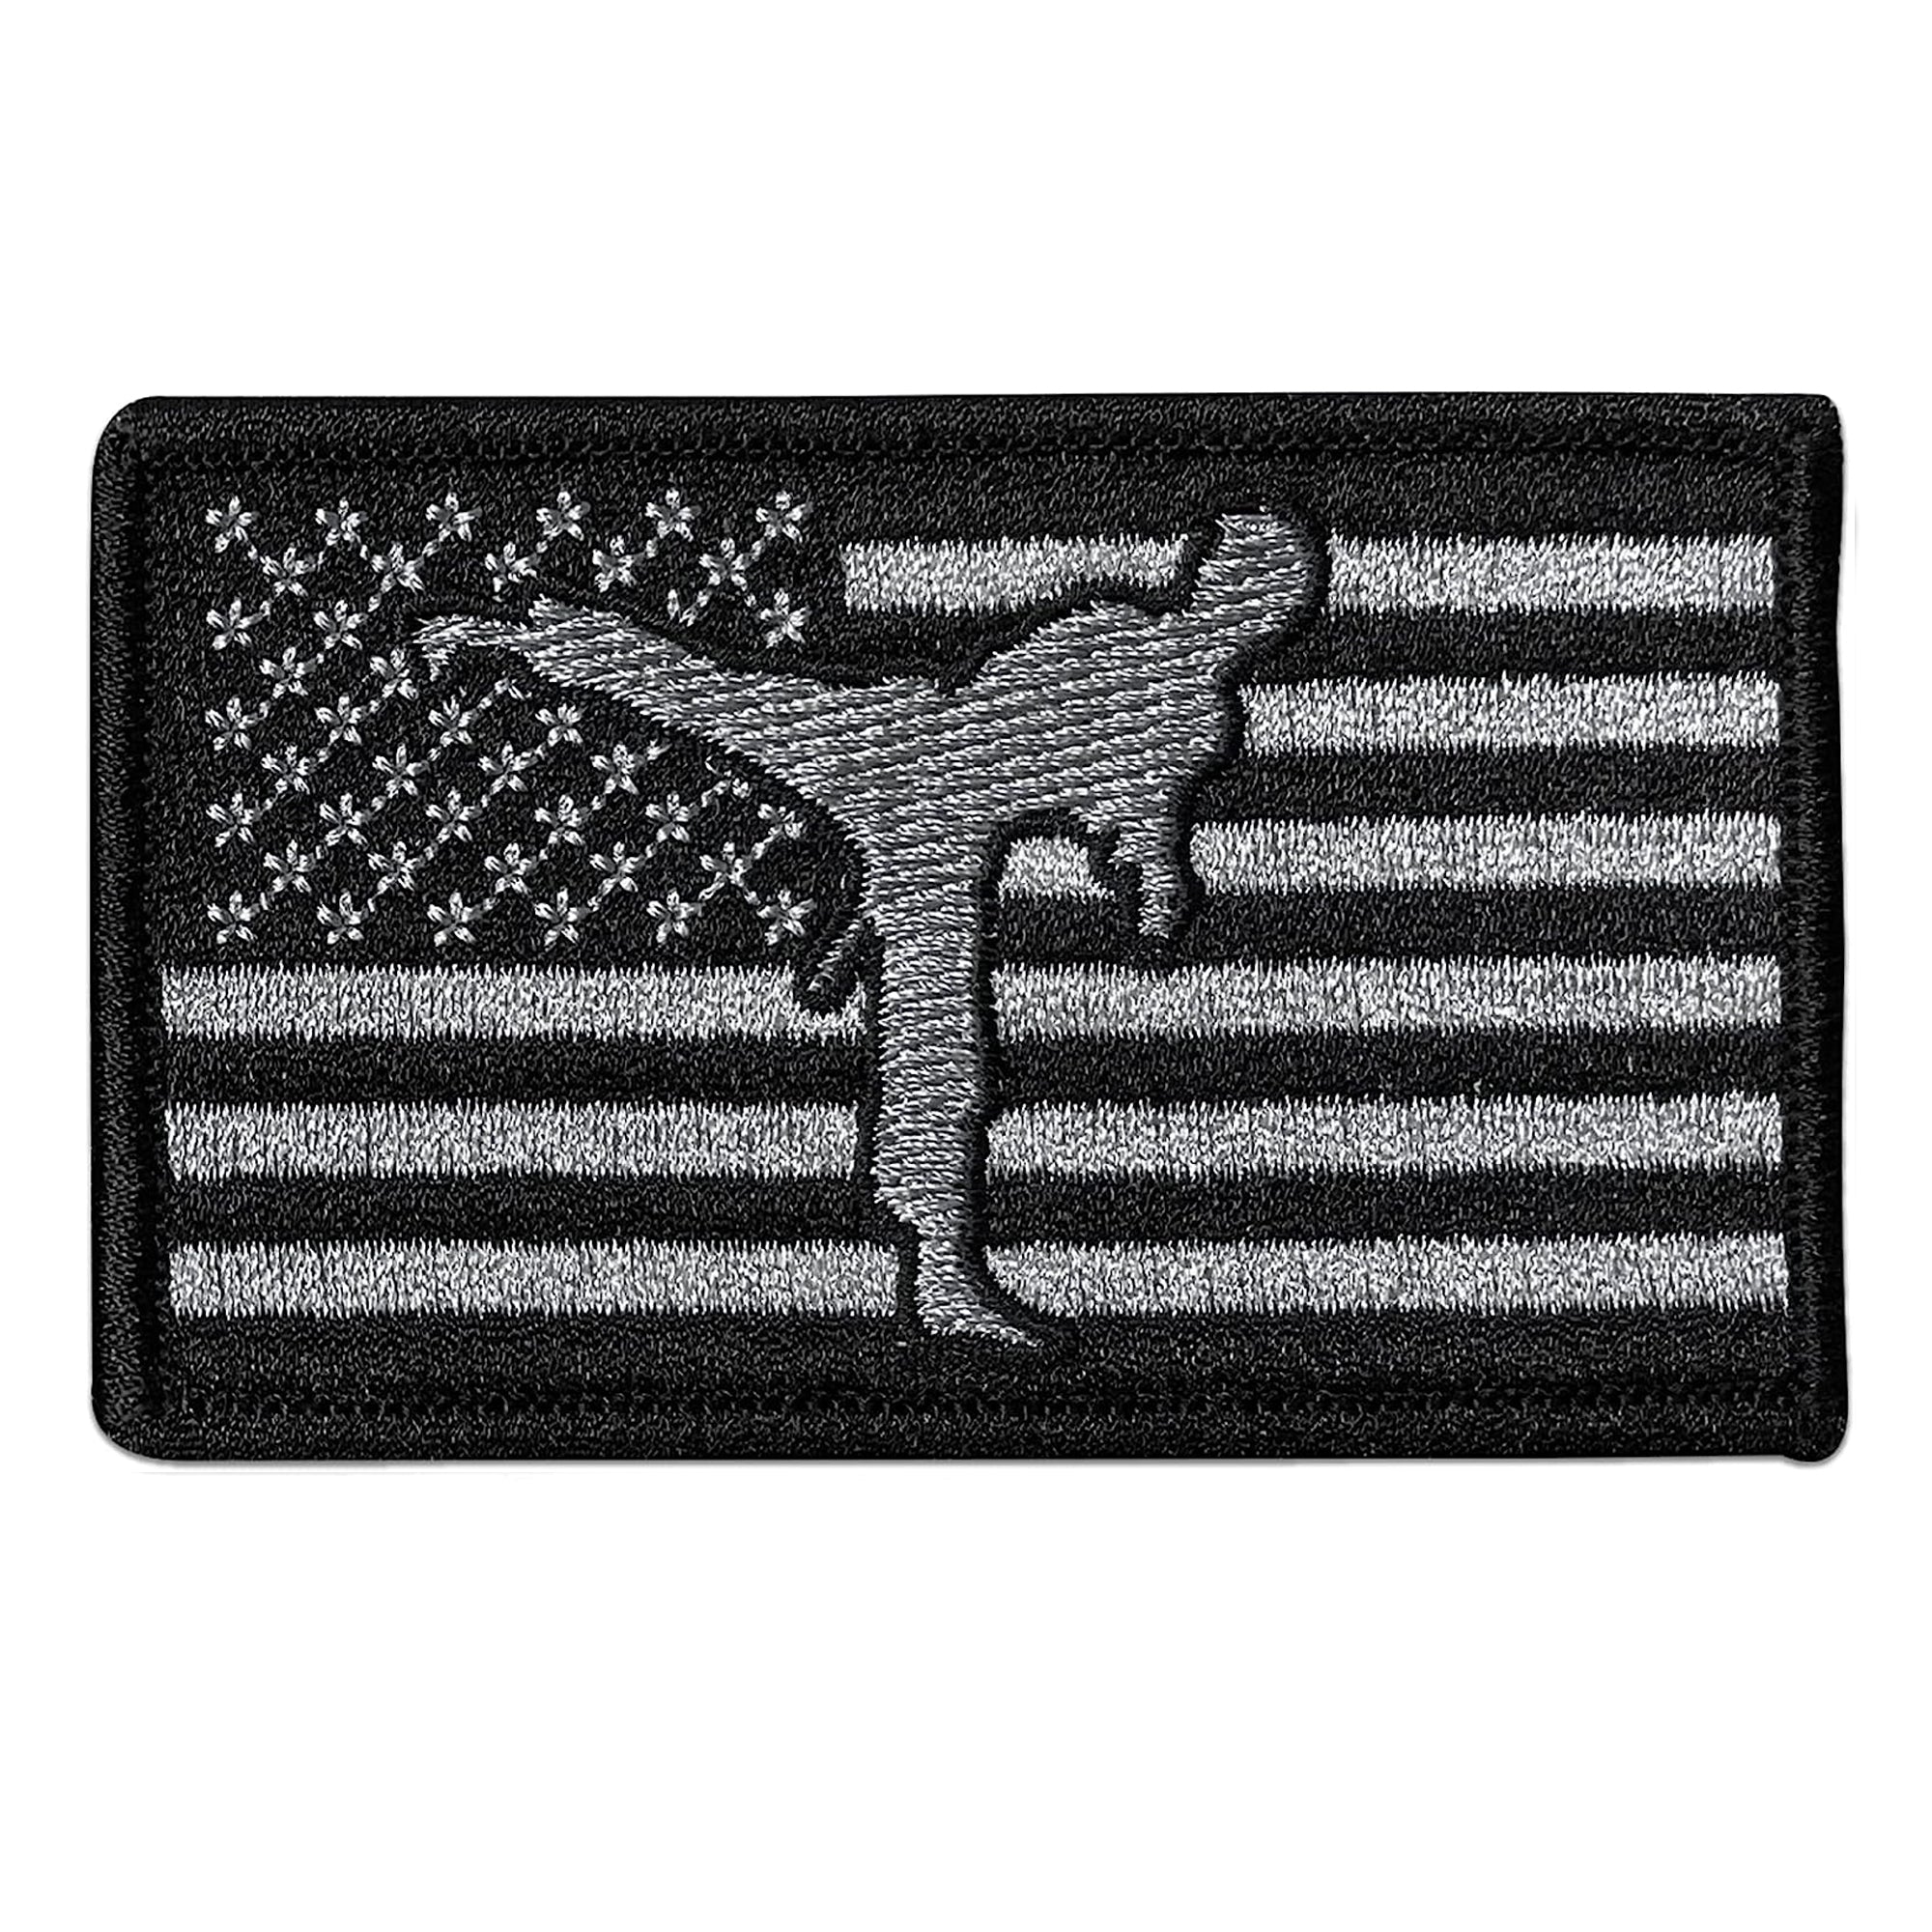 AAMA Taekwondo Kick USA Embroidered Flag Iron On Patch